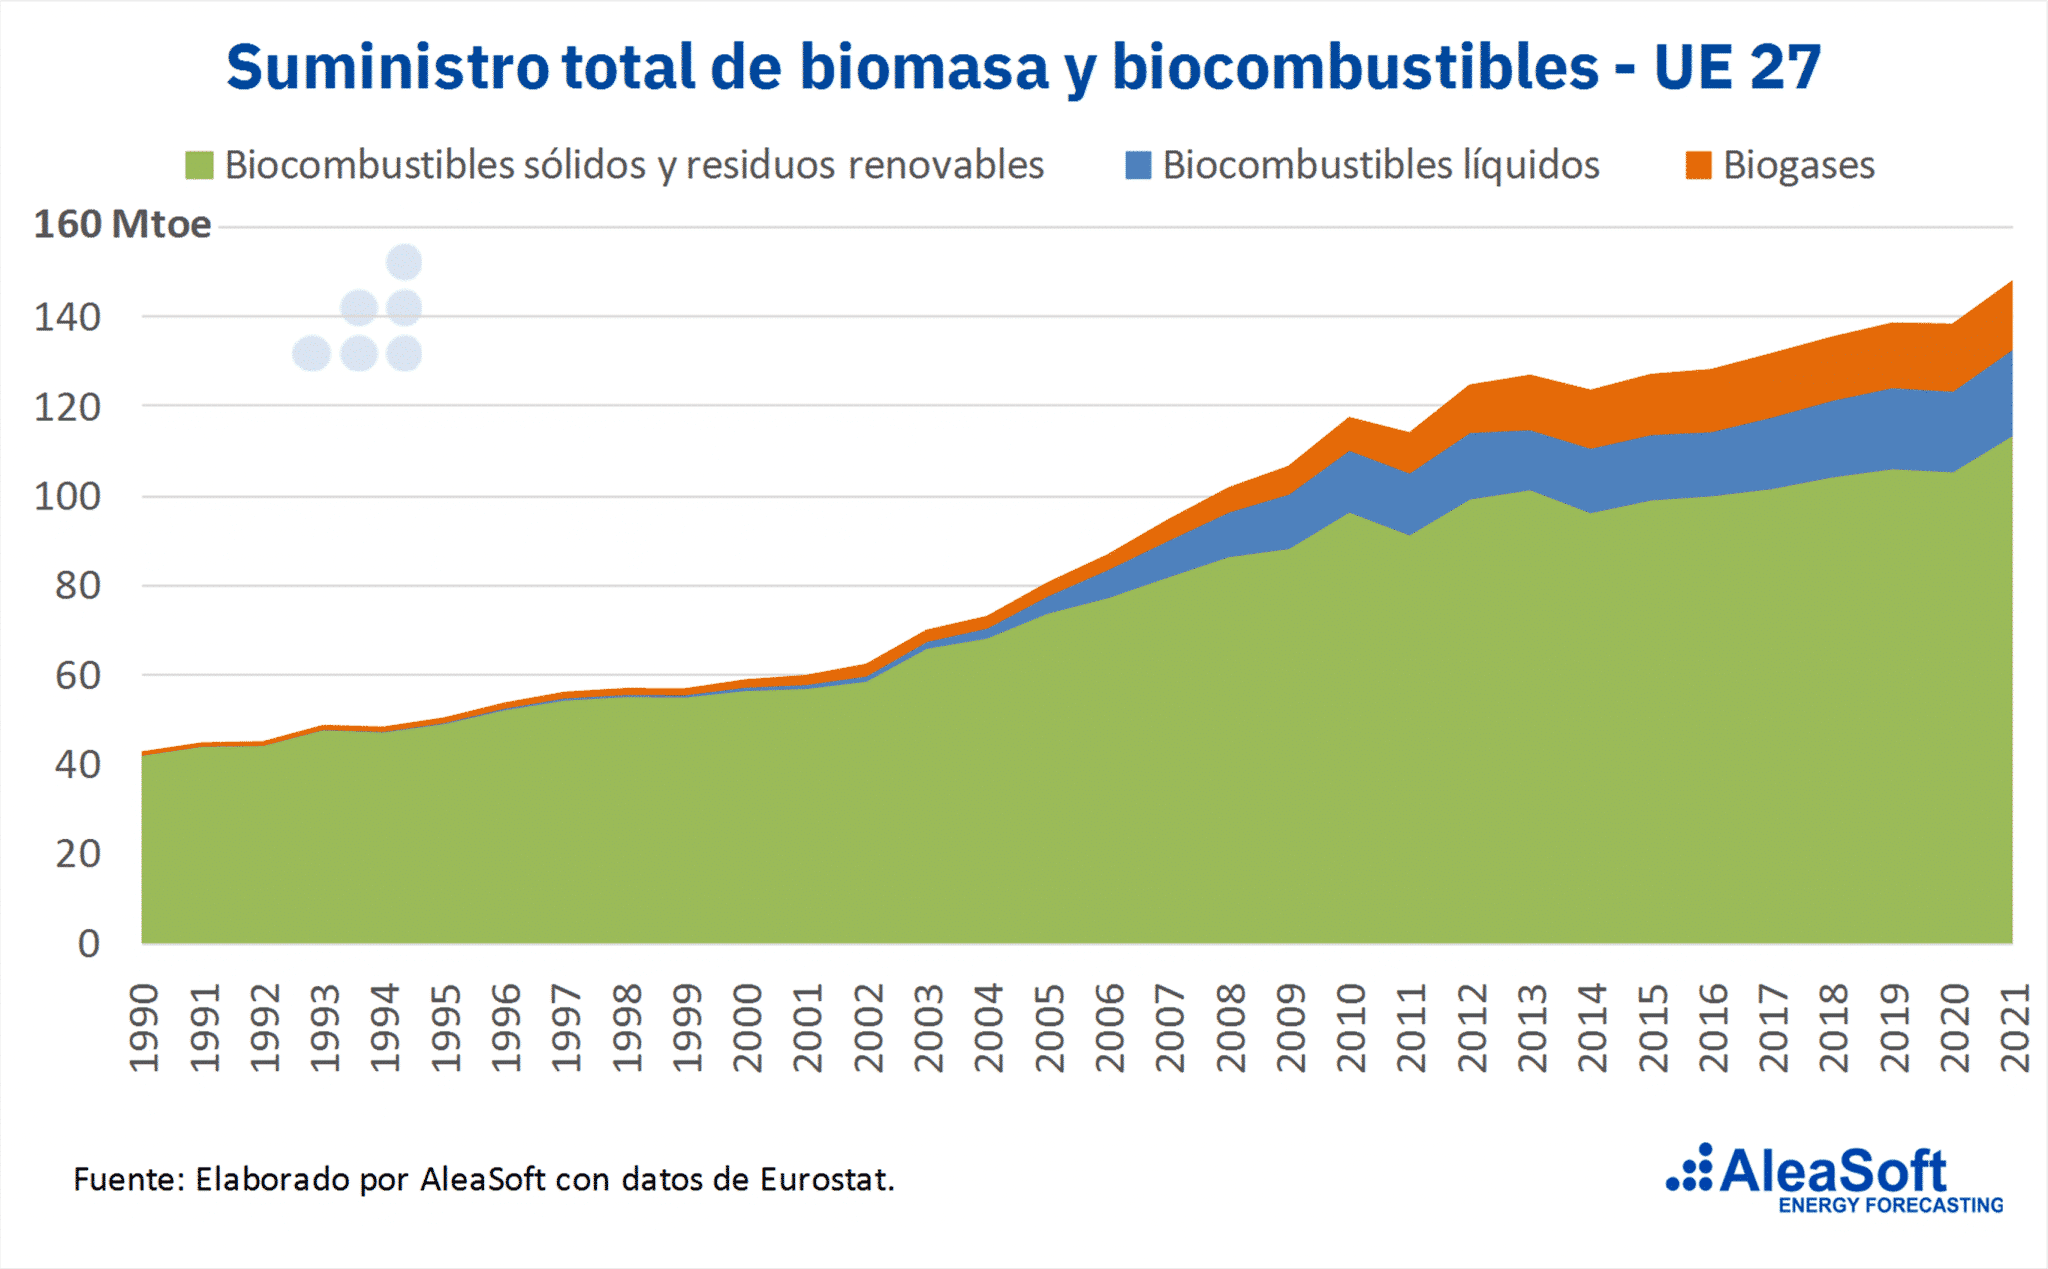 AleaSoft - Suministro total biomasa biocombustibles UE 27